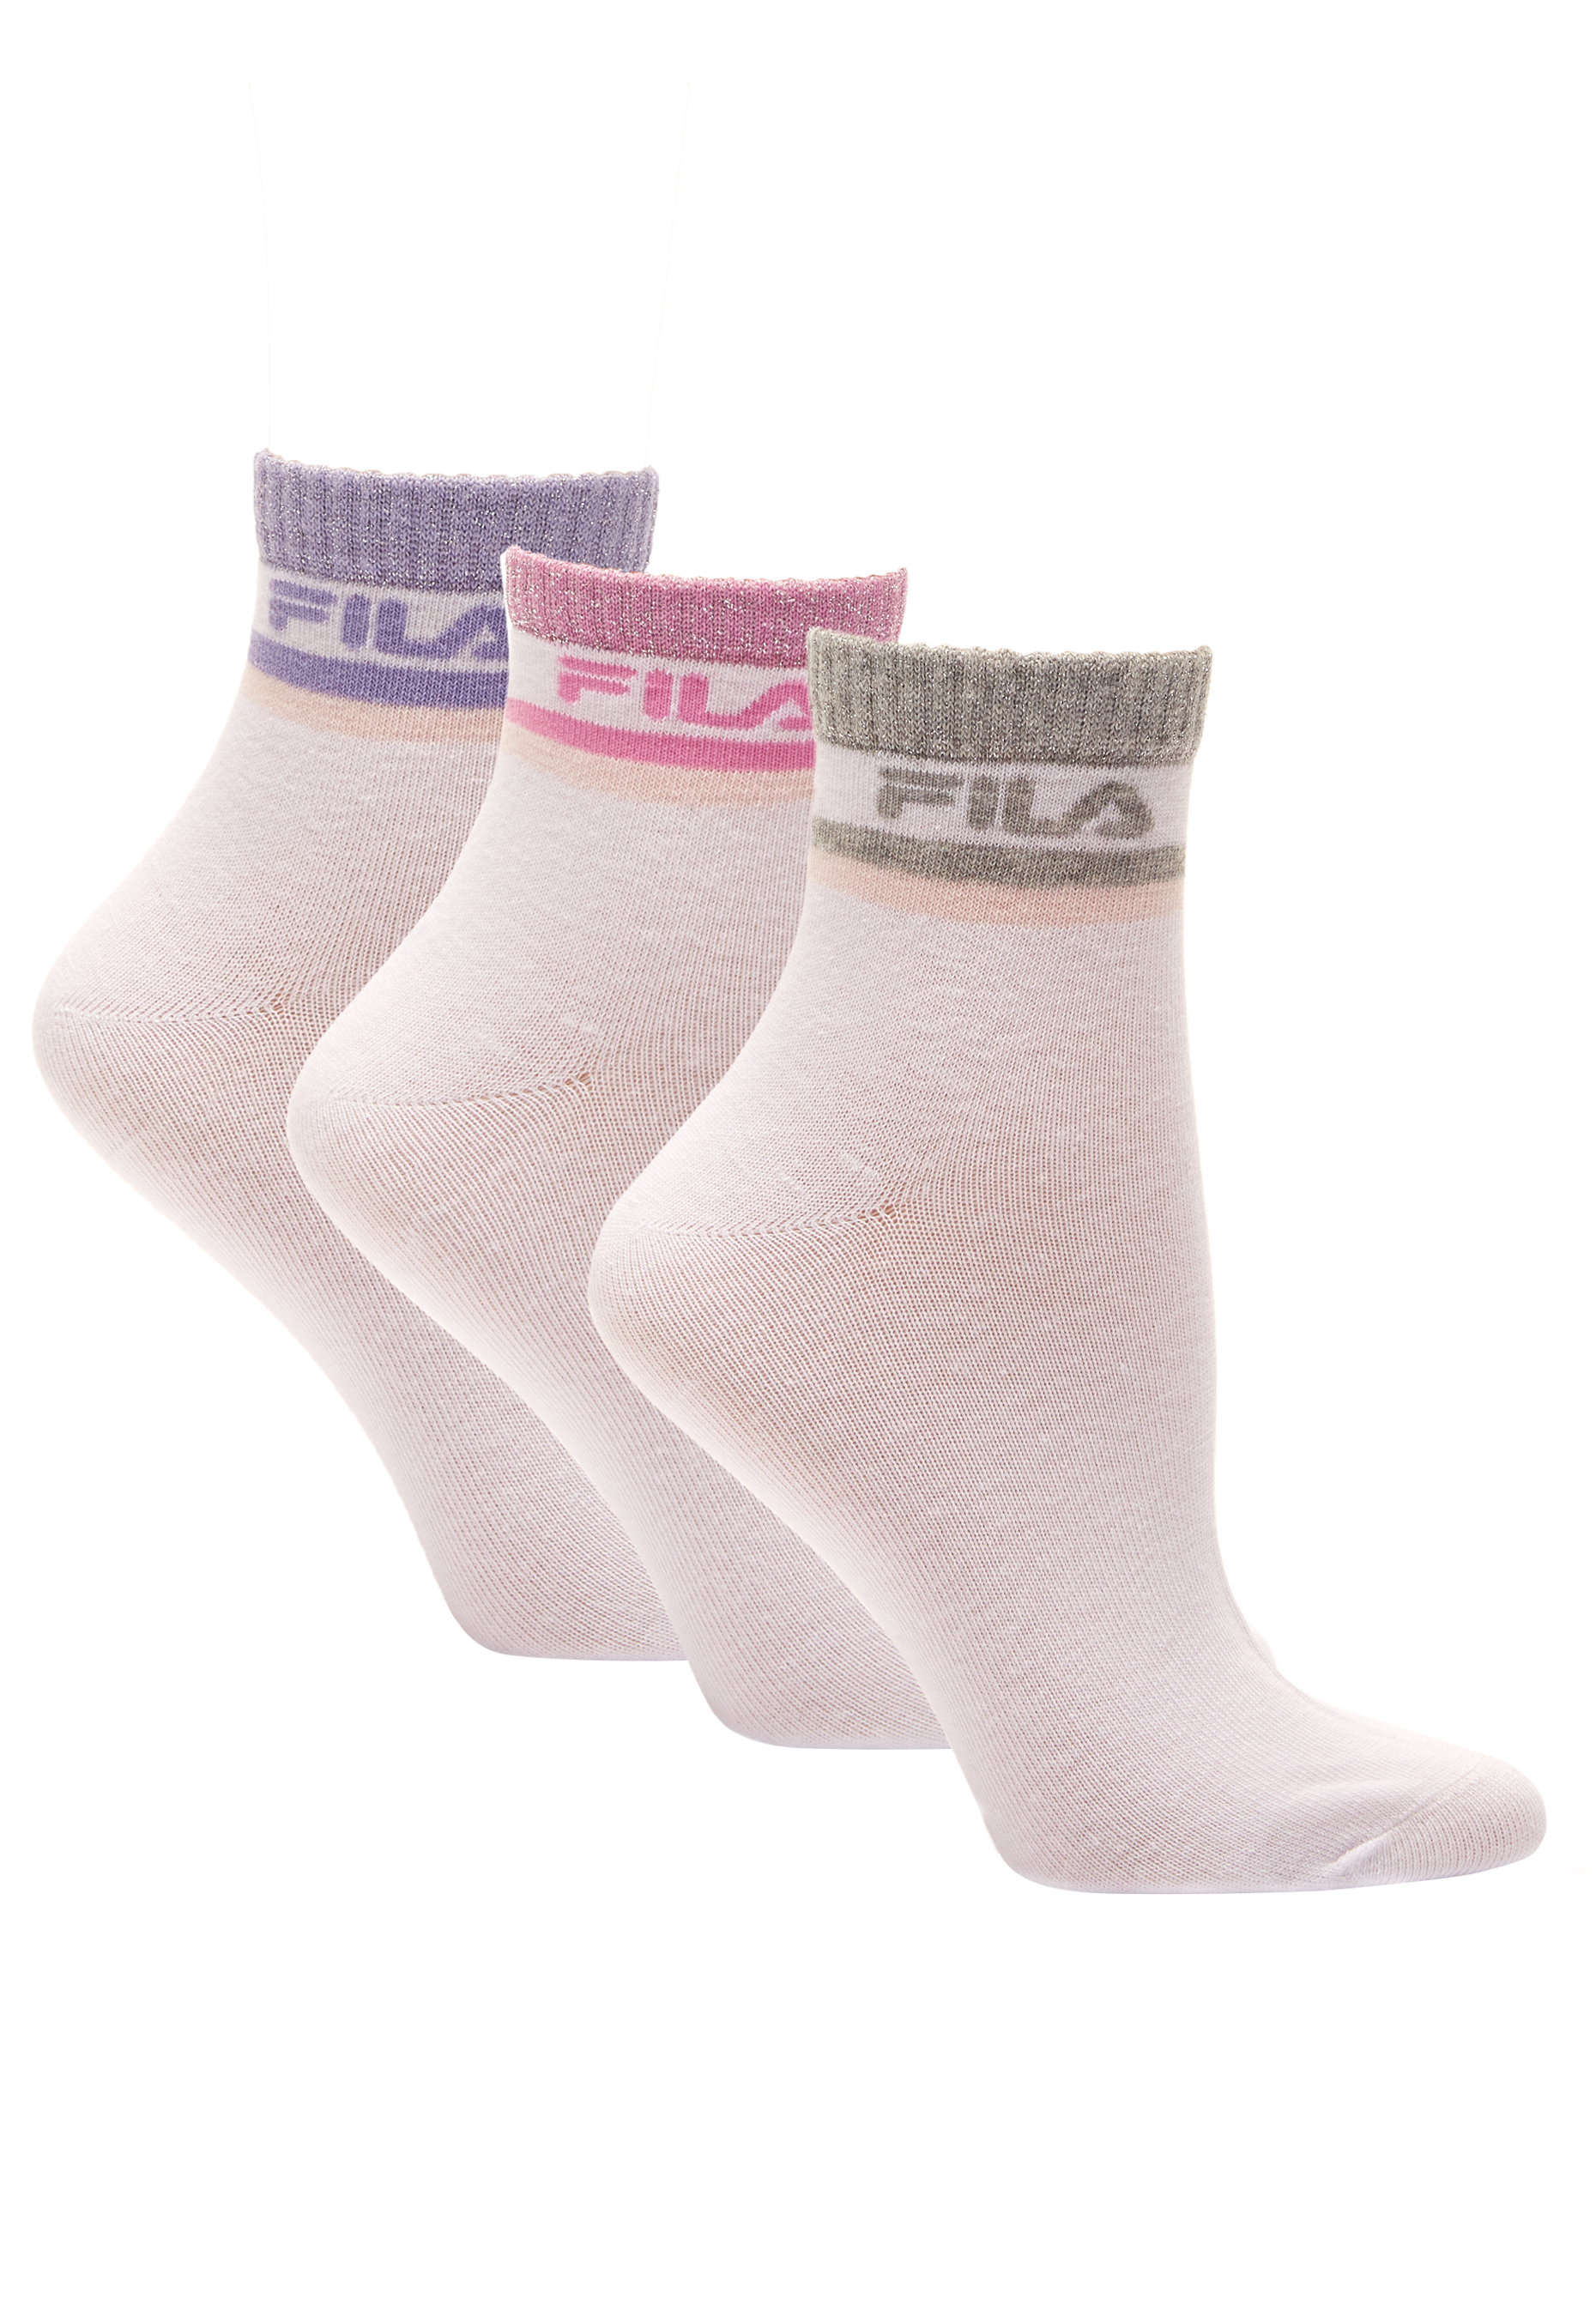 pink fila socks